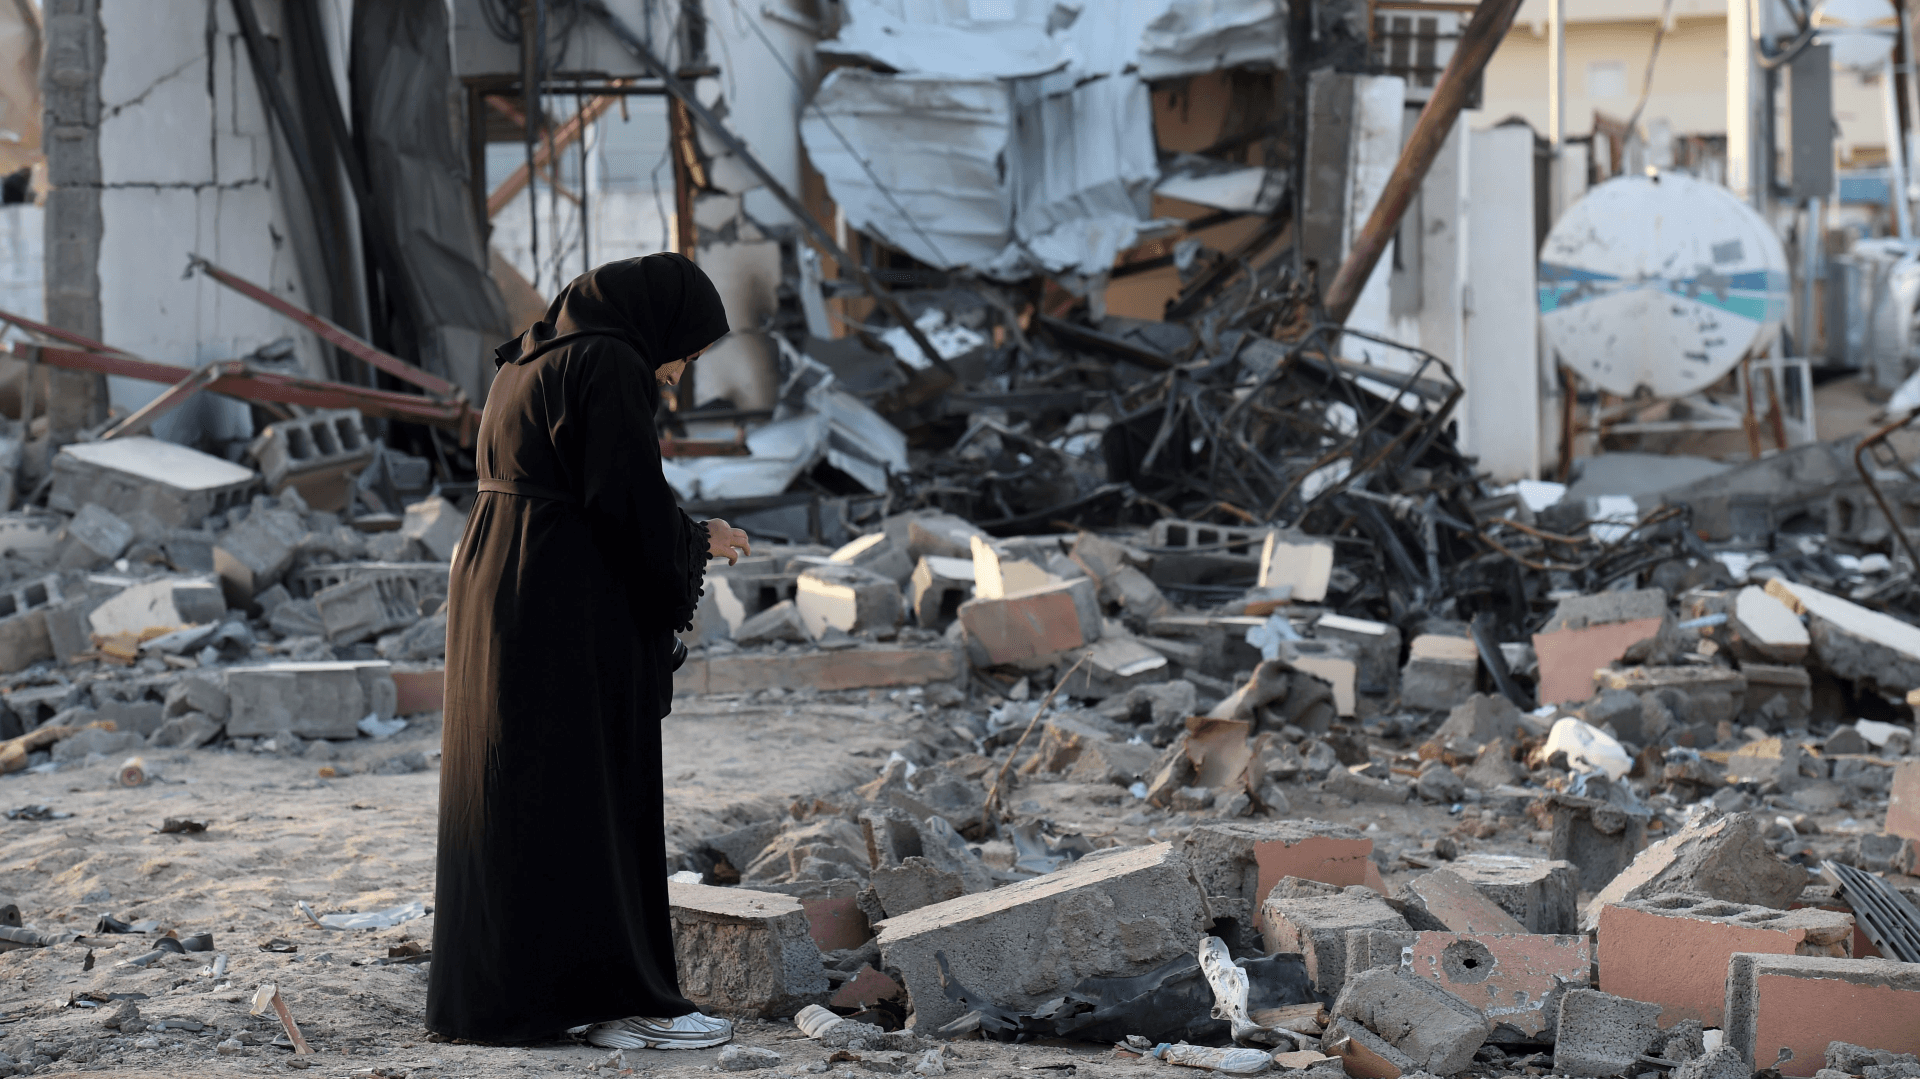 UN seeks access to migrants injured in Yemen blaze